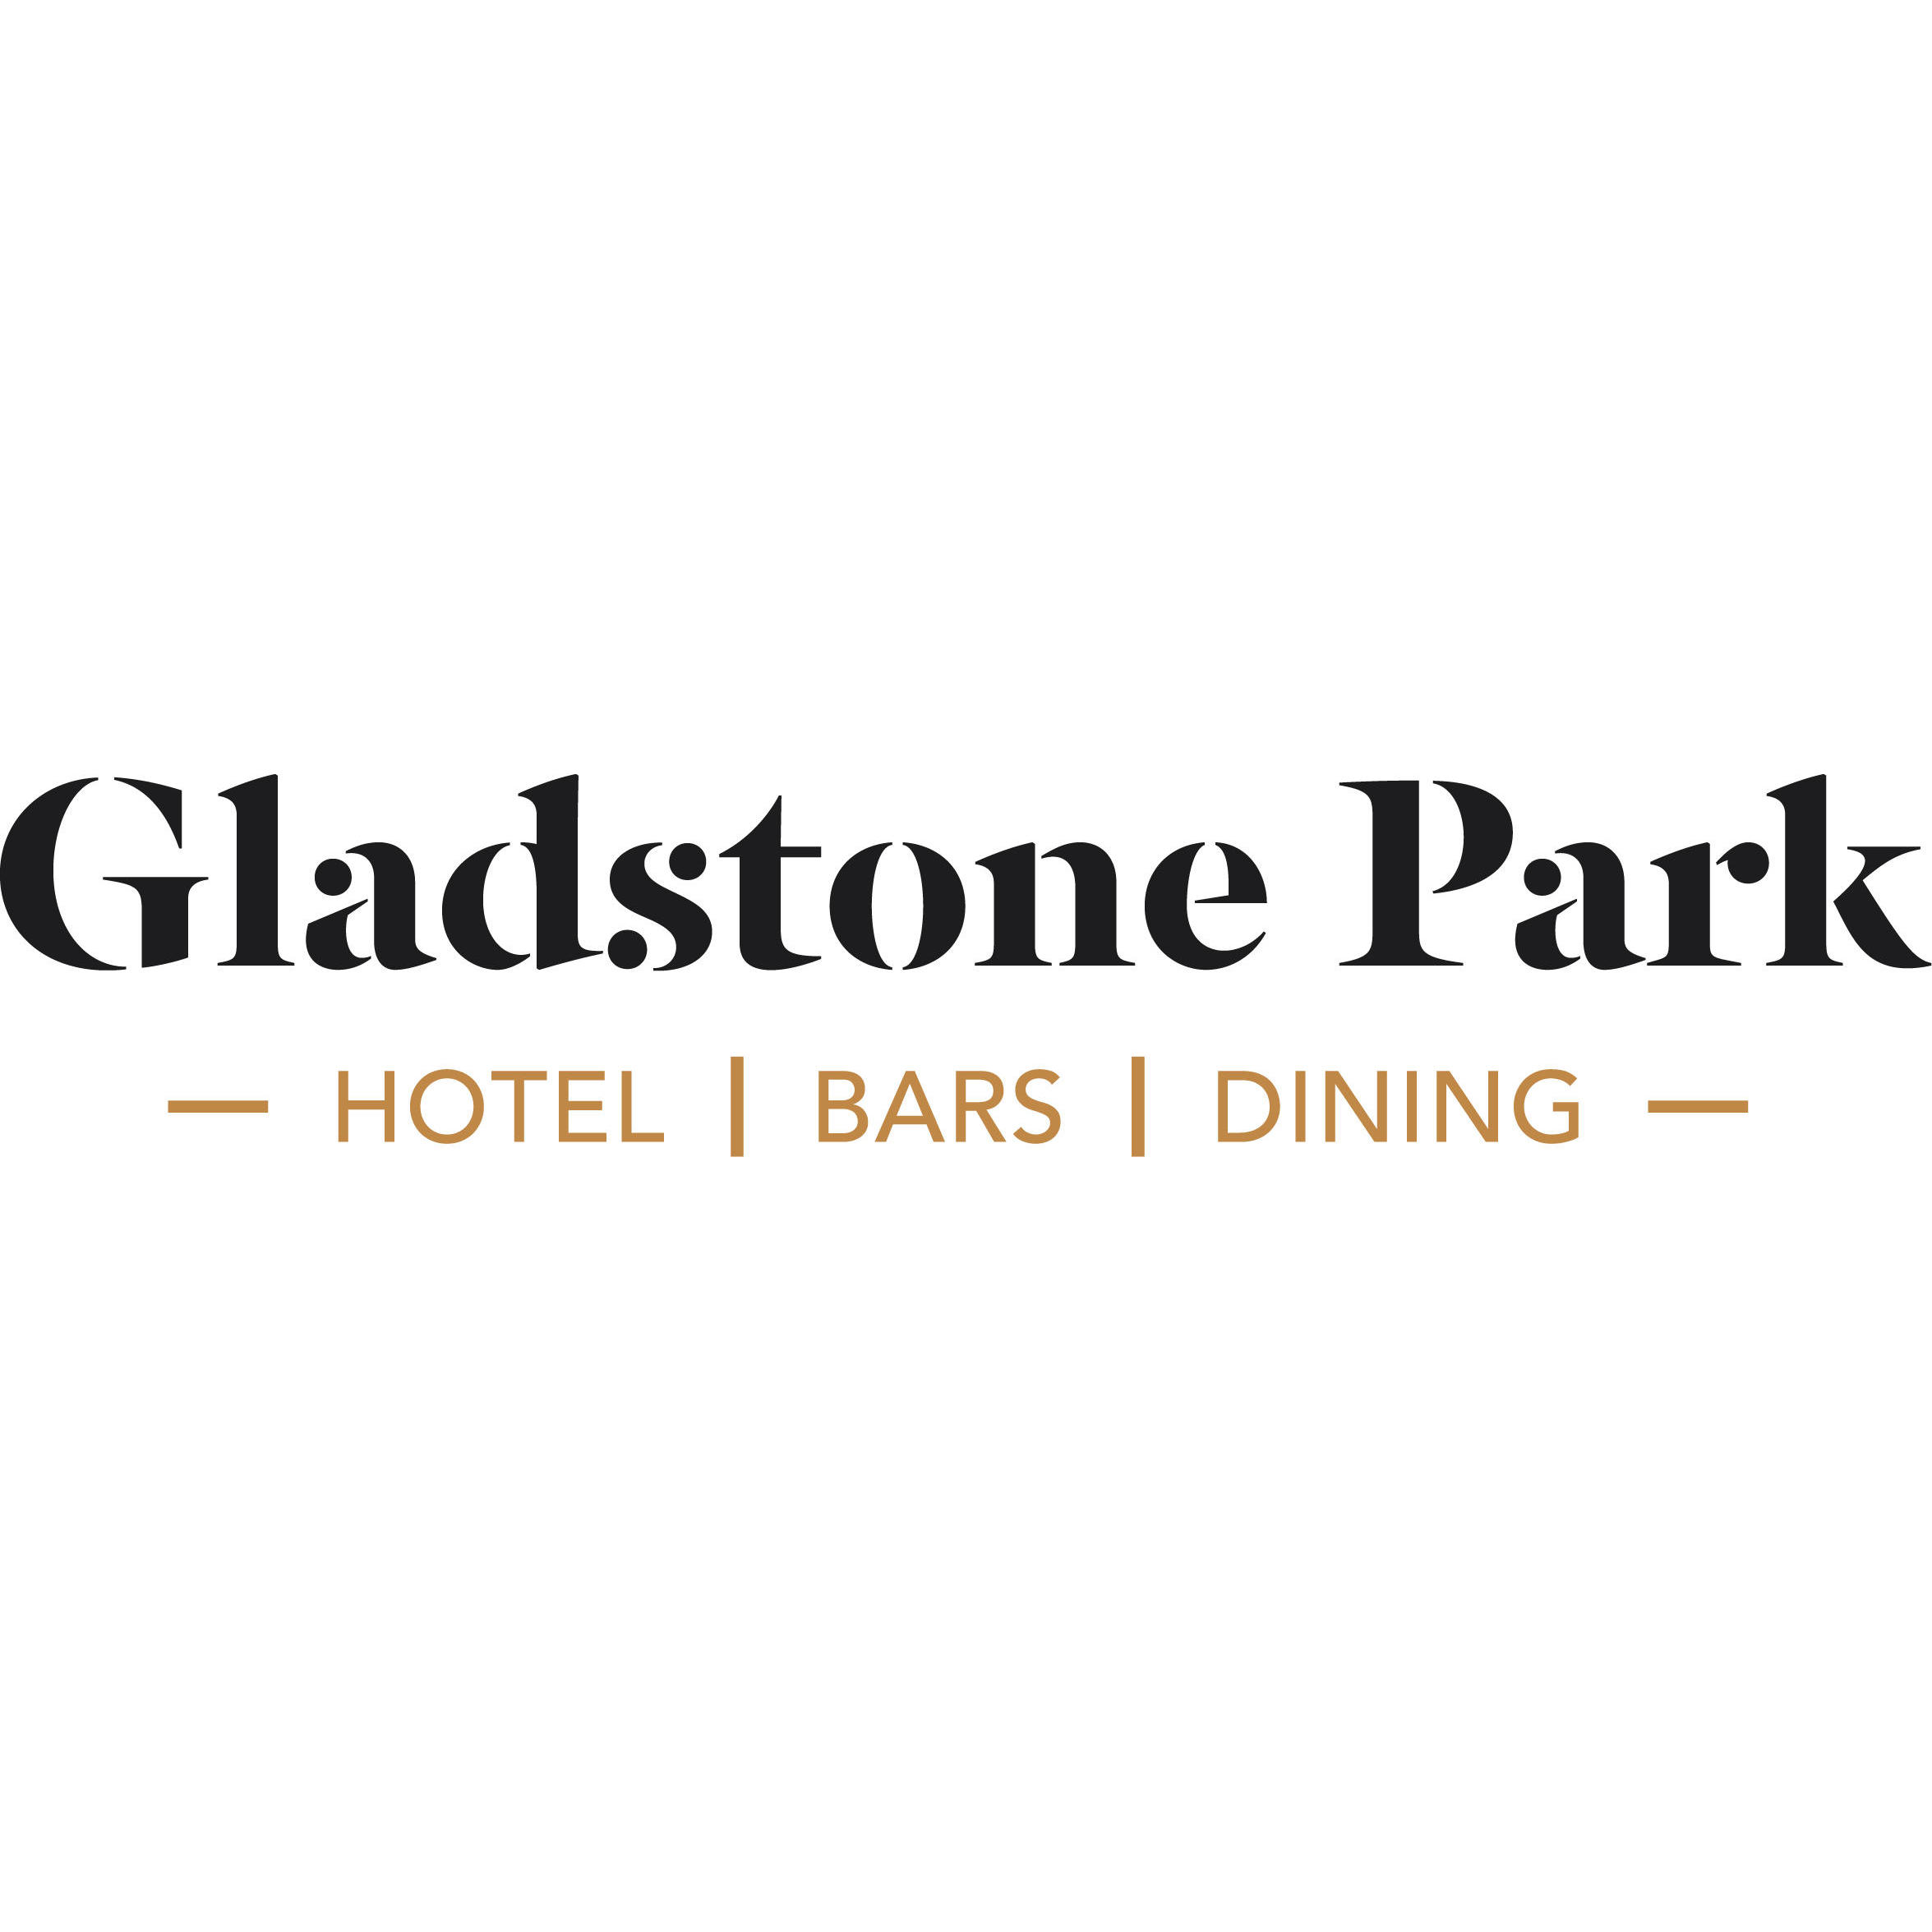 Gladstone Park Hotel - Gladstone Park, VIC 3043 - (03) 9338 3533 | ShowMeLocal.com